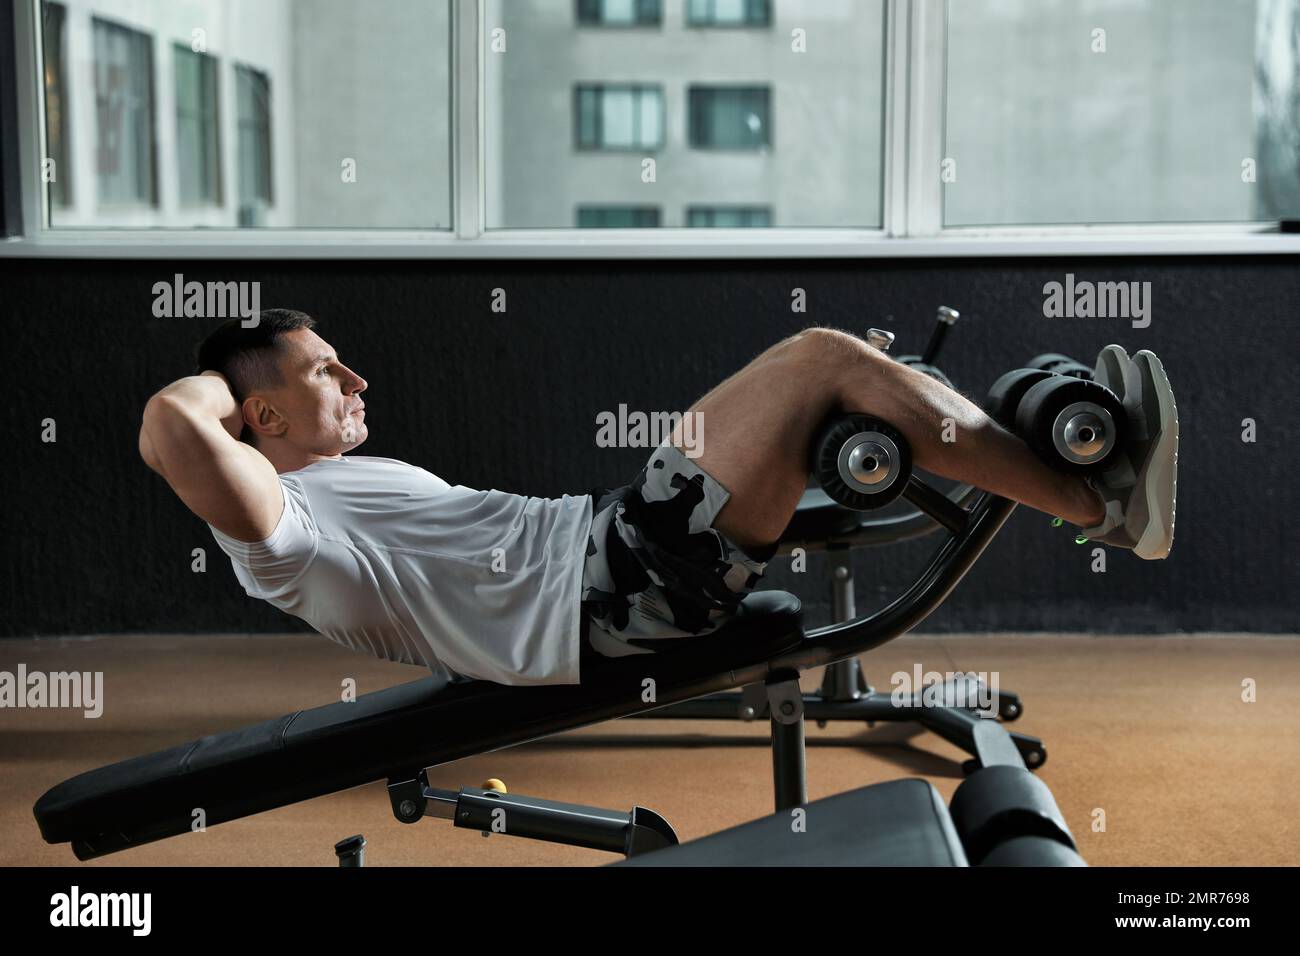 https://c8.alamy.com/comp/2MR7698/man-working-out-on-adjustable-sit-up-bench-in-modern-gym-2MR7698.jpg